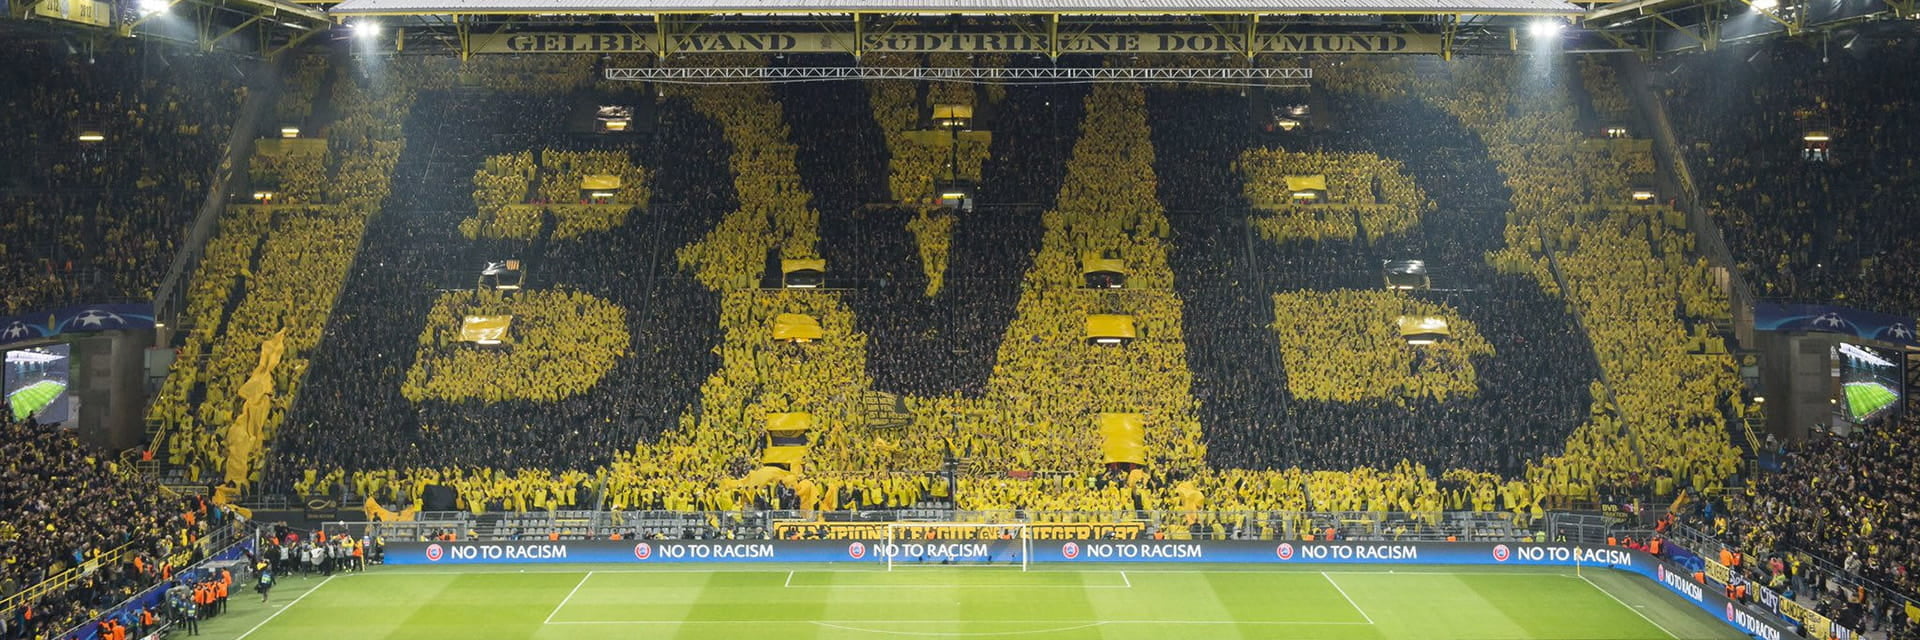 Borussia Dortmund - VfB Stuttgart, 6 oktoberom 15:30